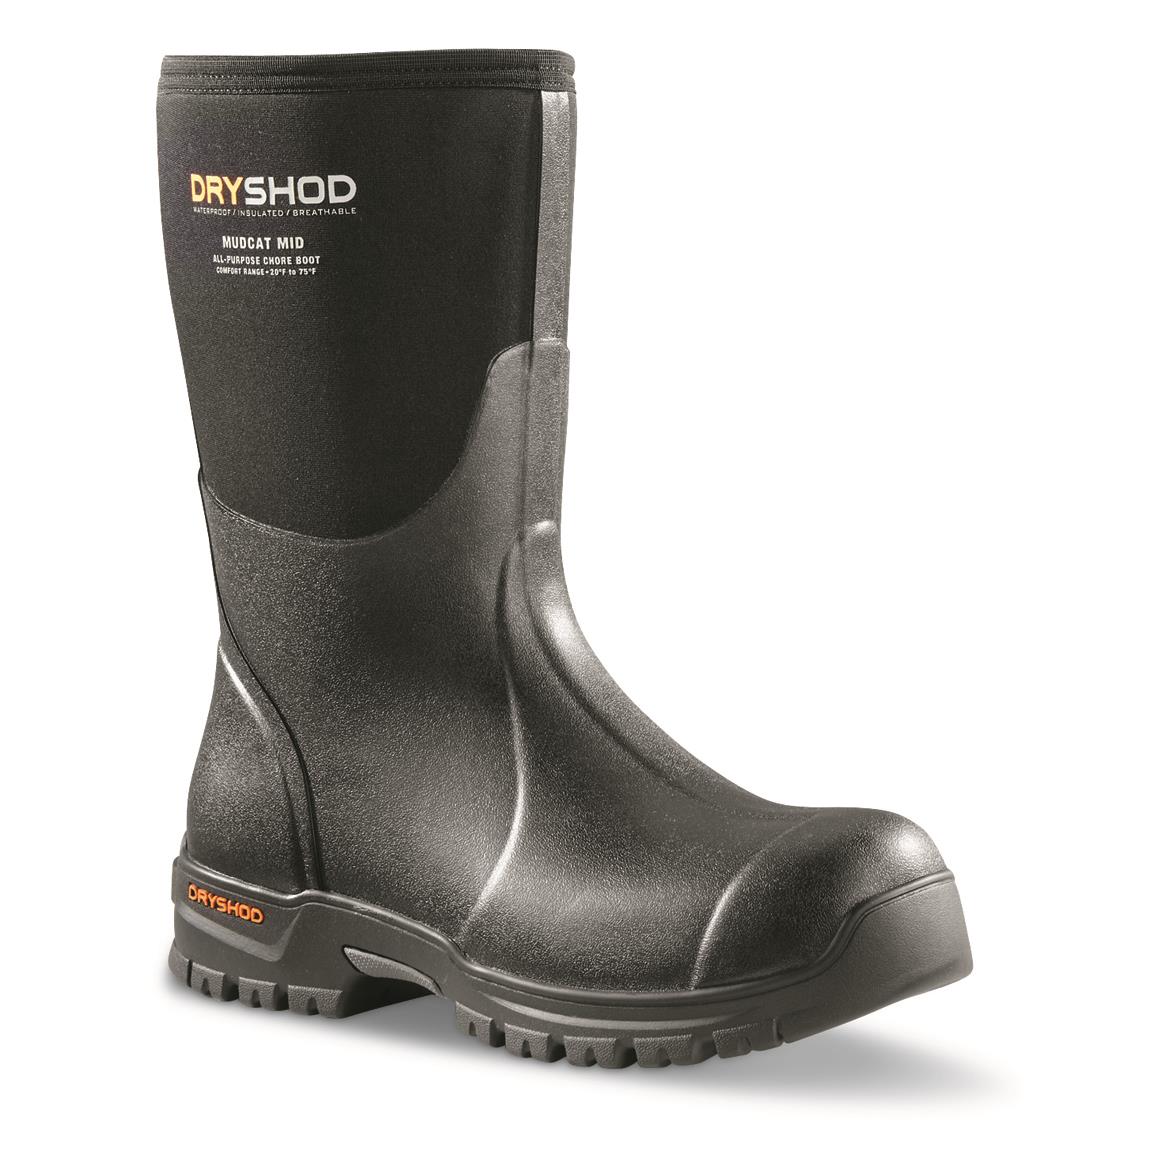 DryShod Men's Mudcat Mid Rubber Work Boots, Black